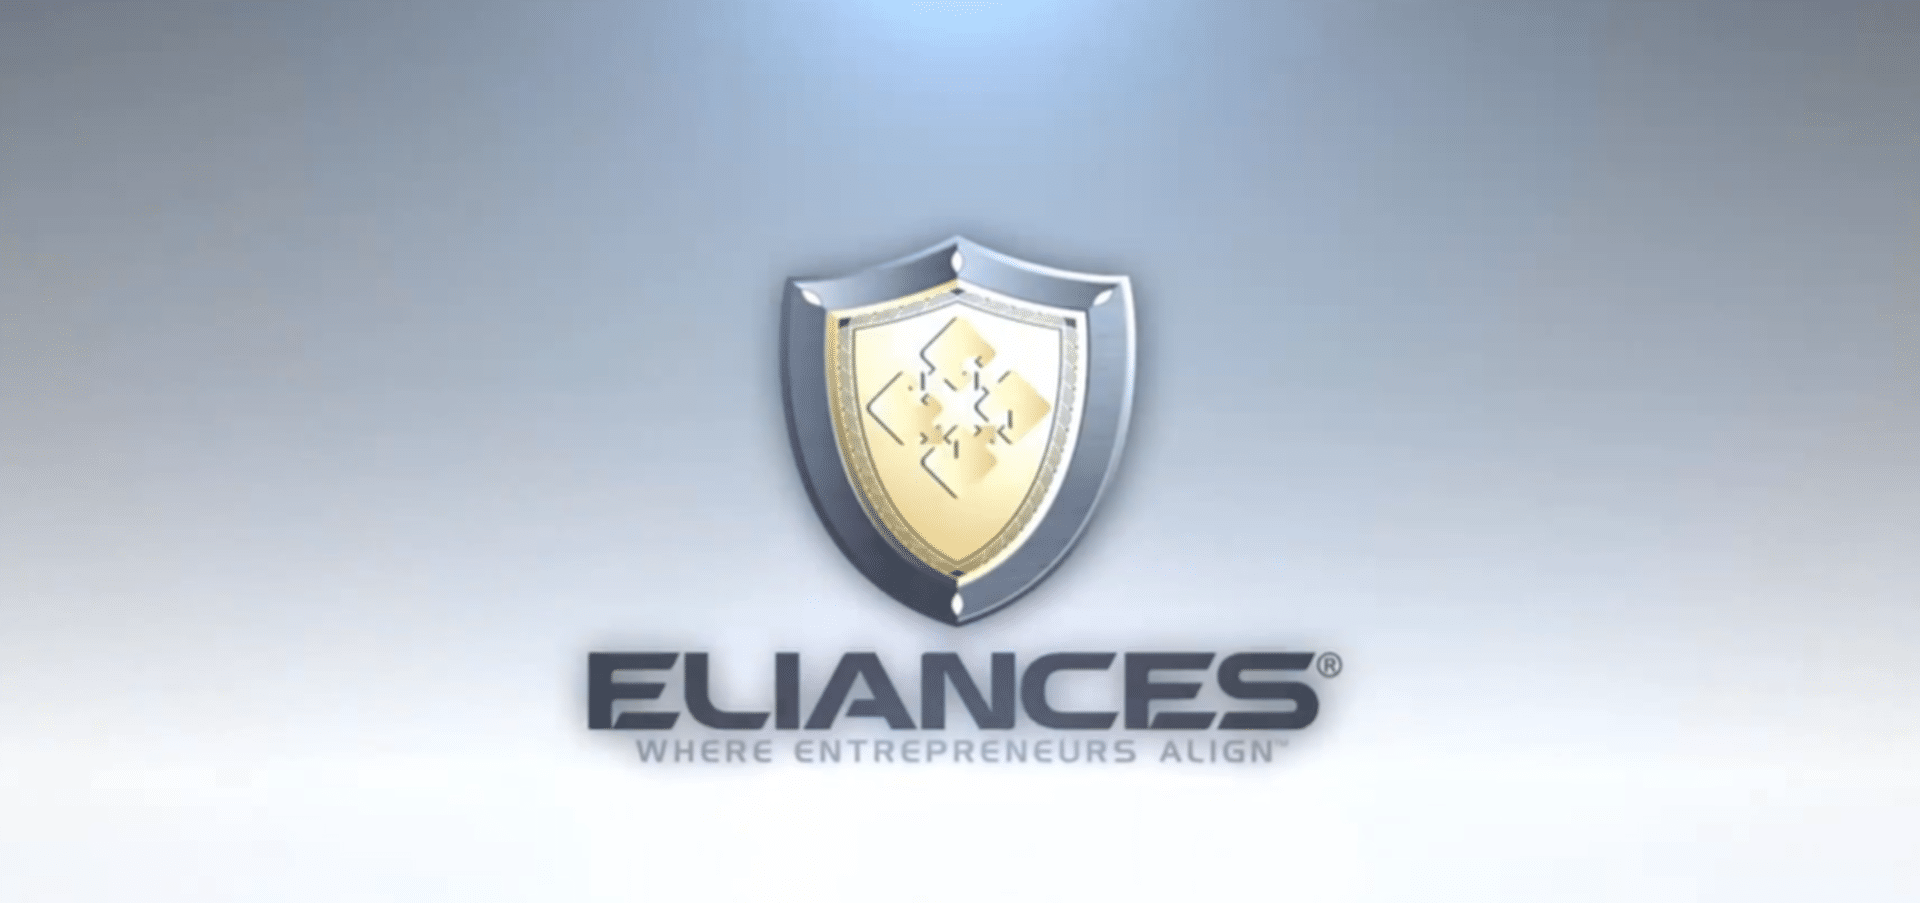 Eliances logo